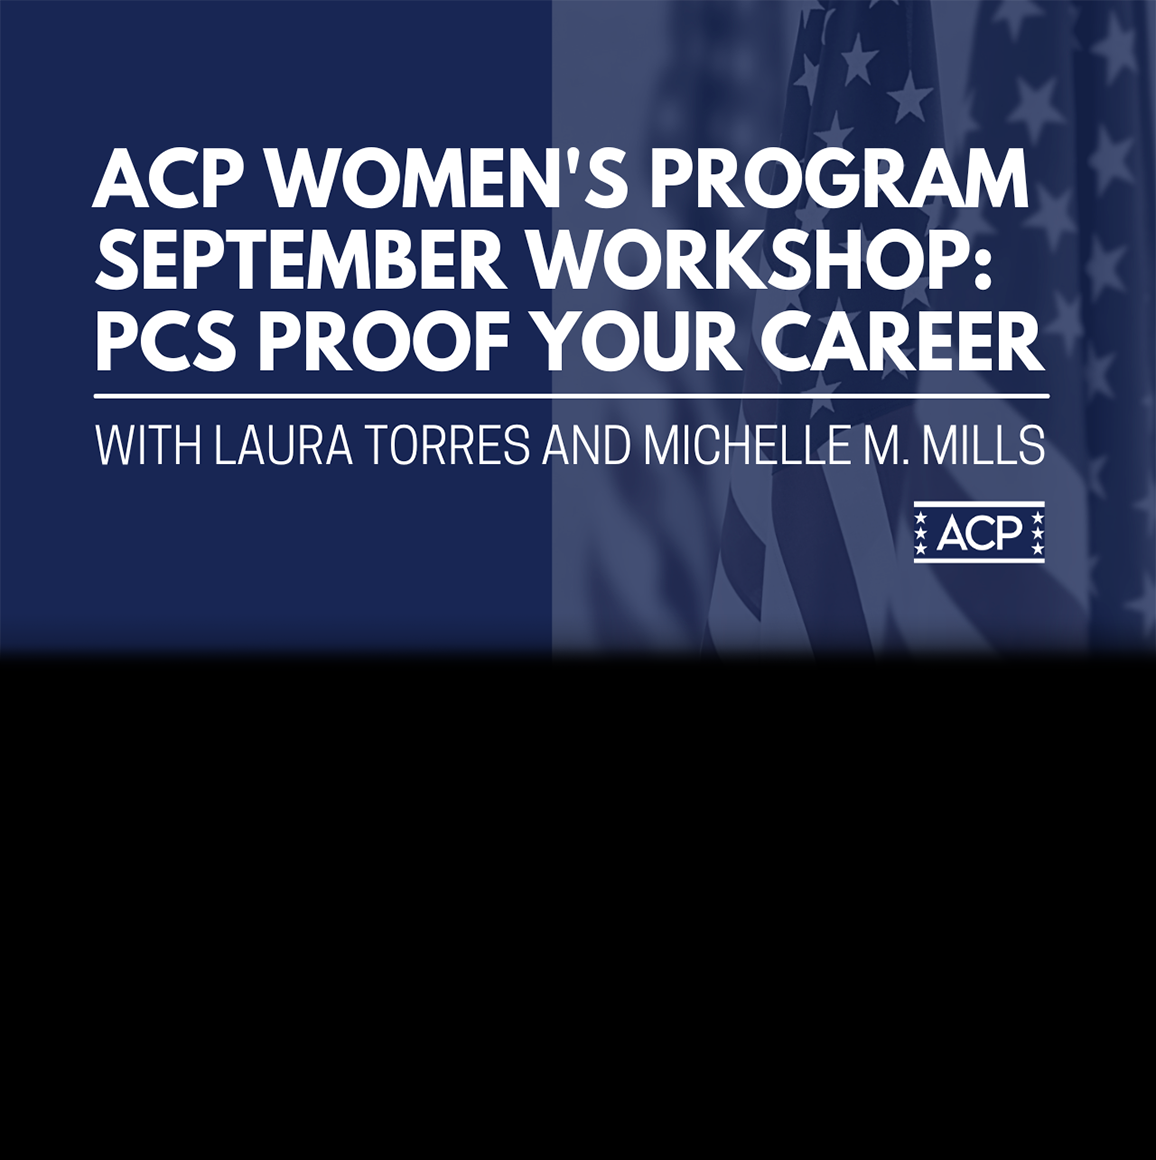 ACP Women's Program September Workshop: PCS Proof Your Career